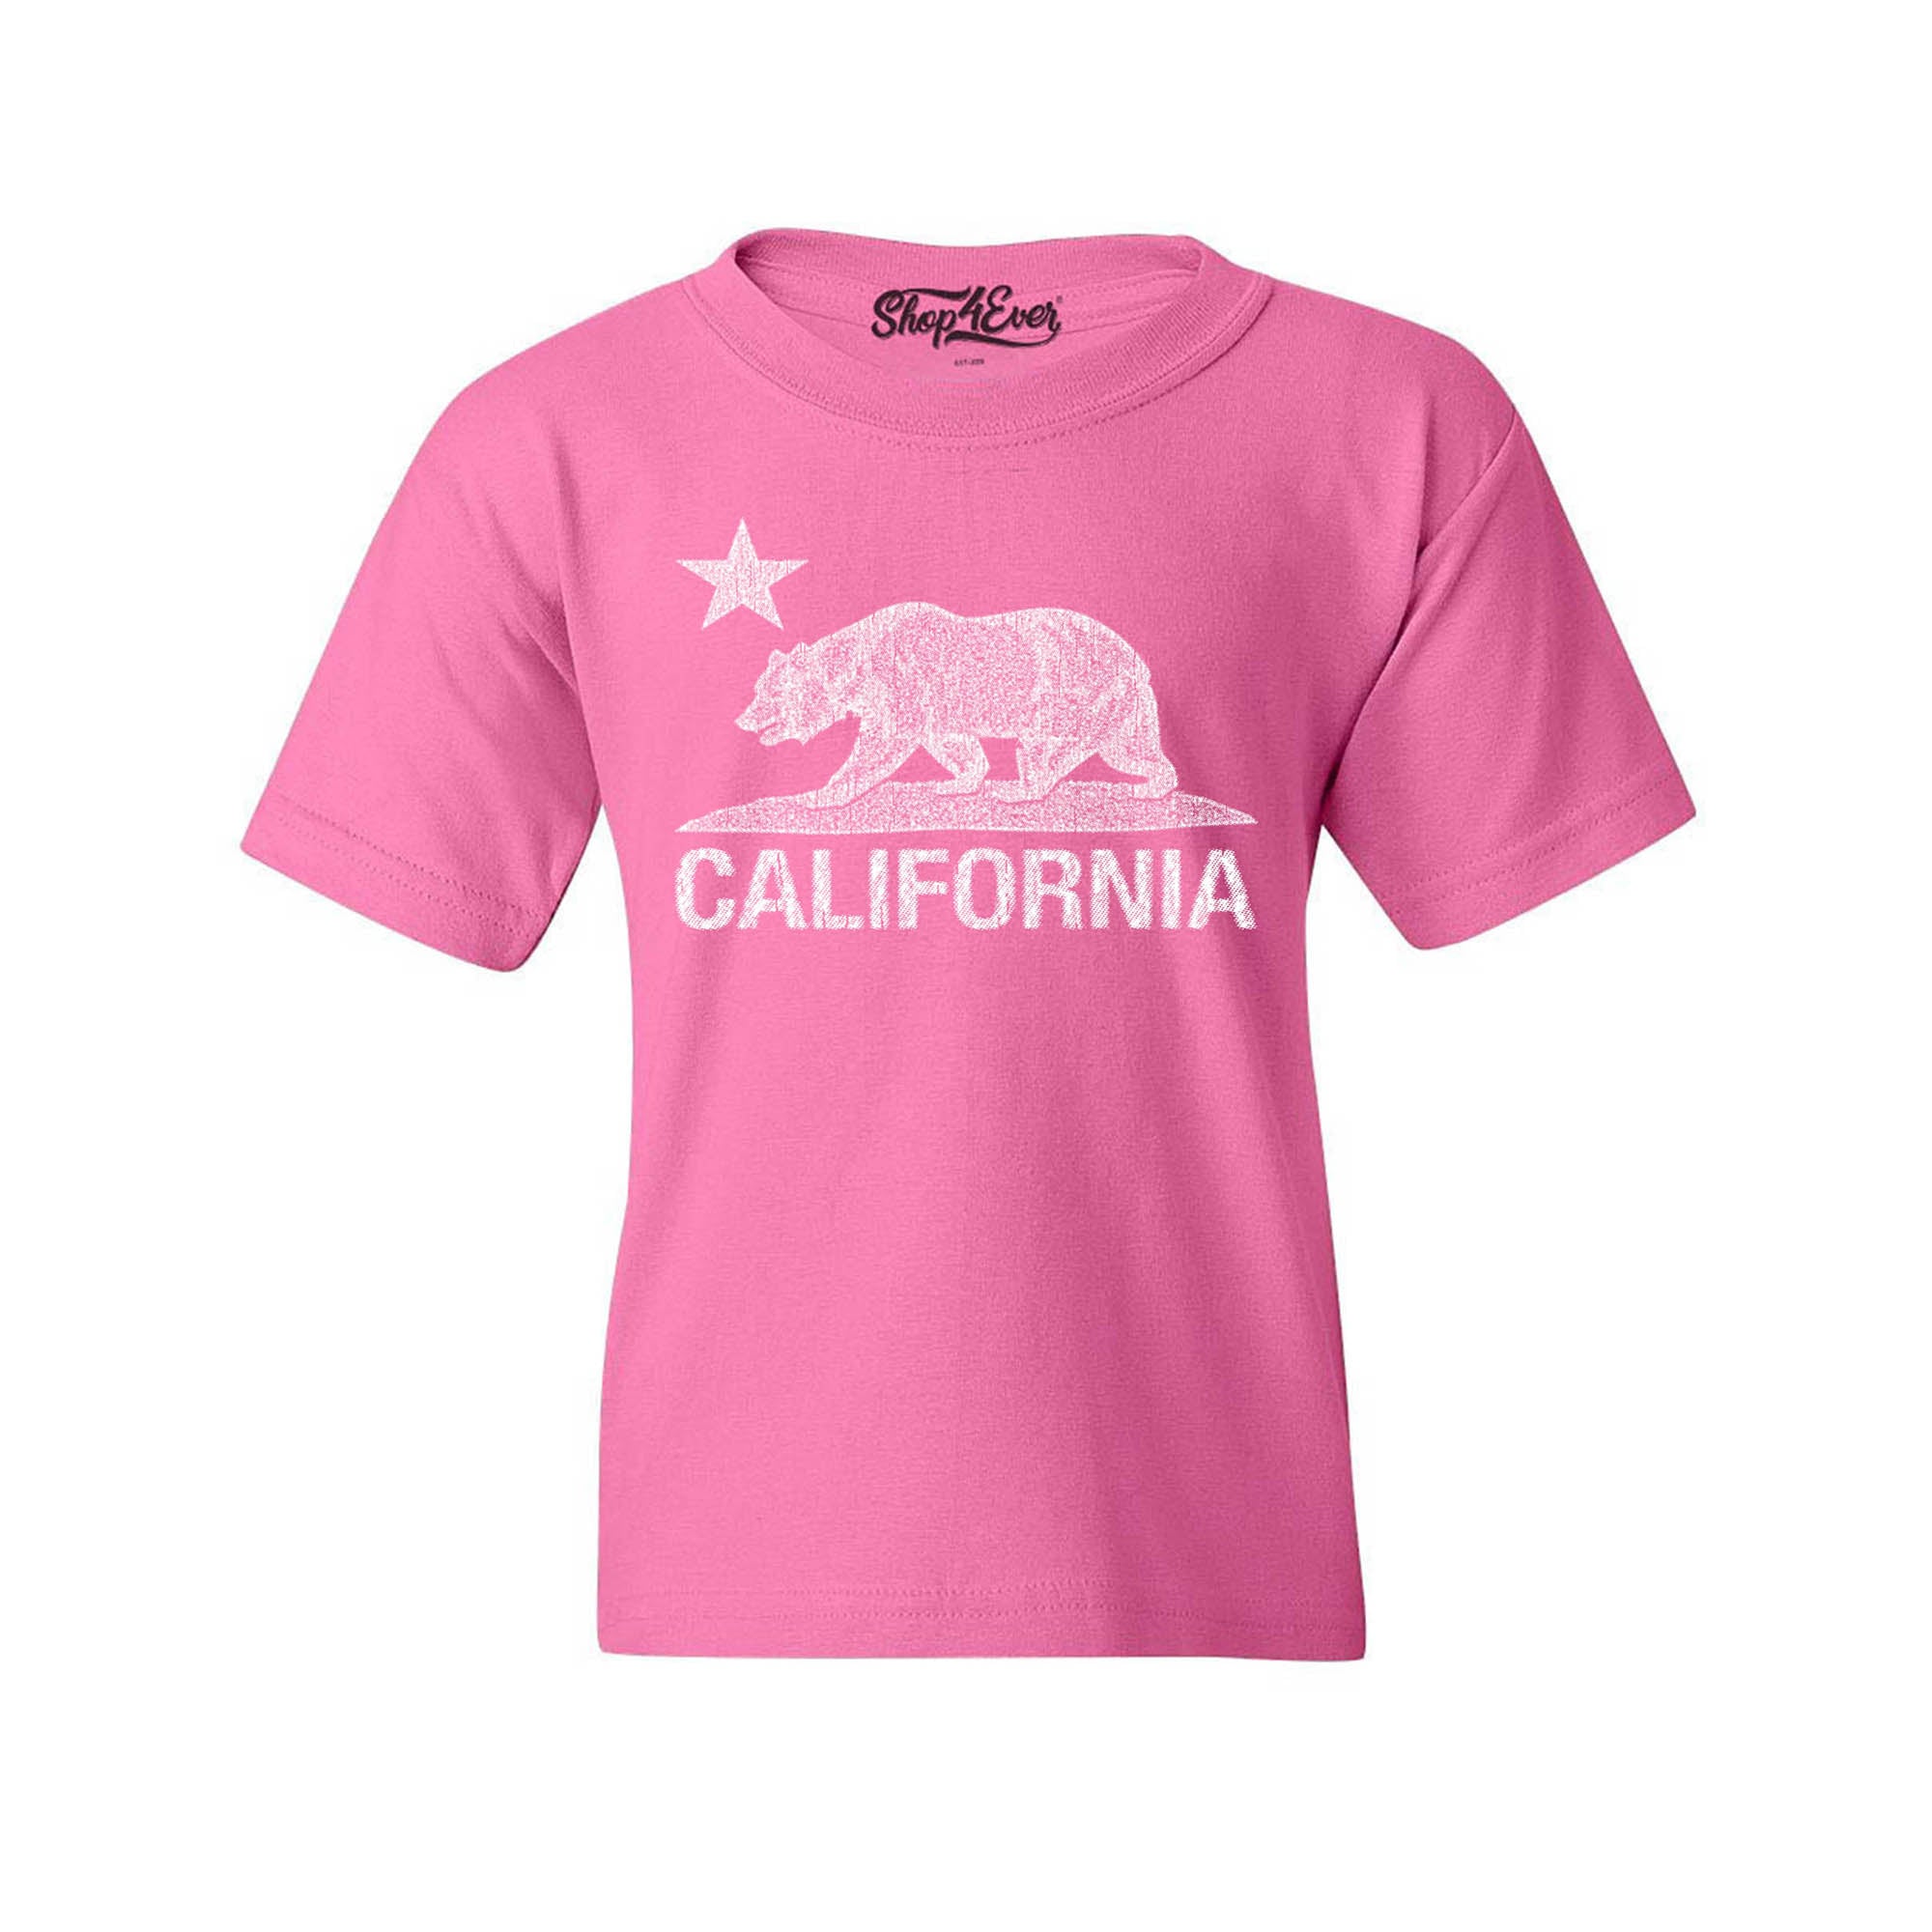 California Distressed White Bear Youth's T-Shirt Cali Child Kids Tee Shirts